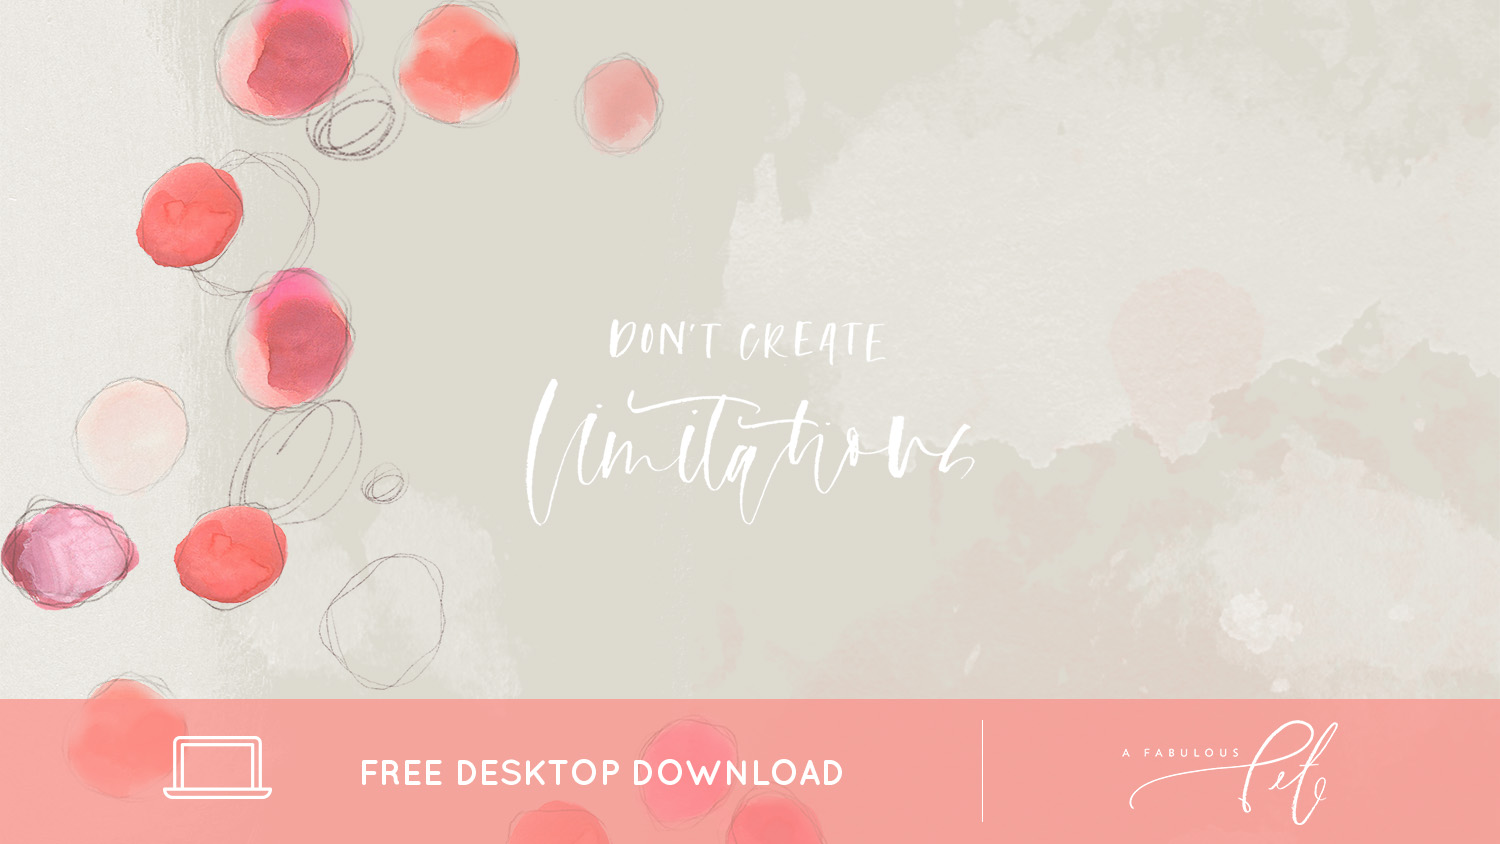 FREE Designer Desktop Wallpapers